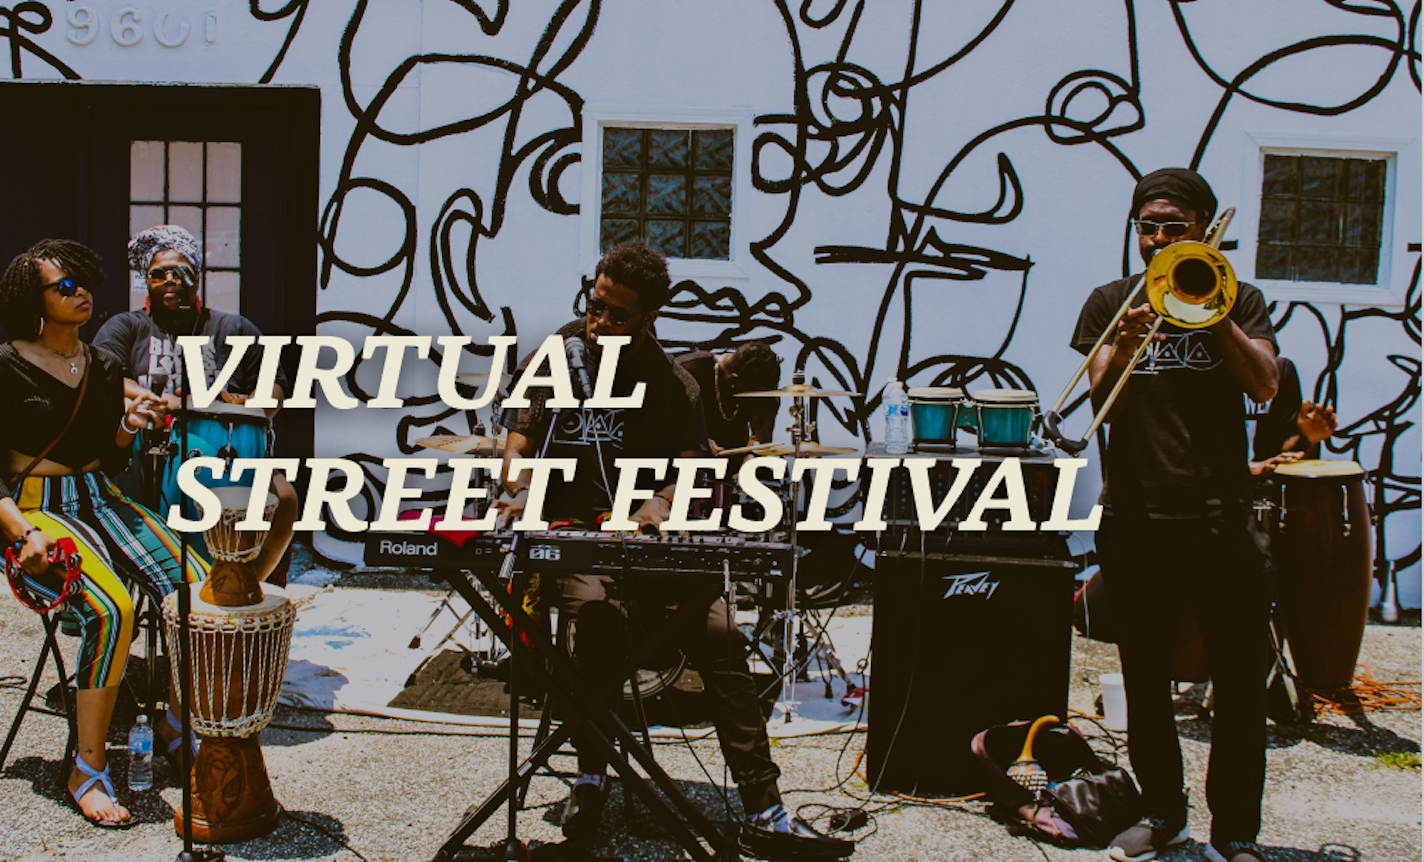 Saturday: Virtual Street Festival